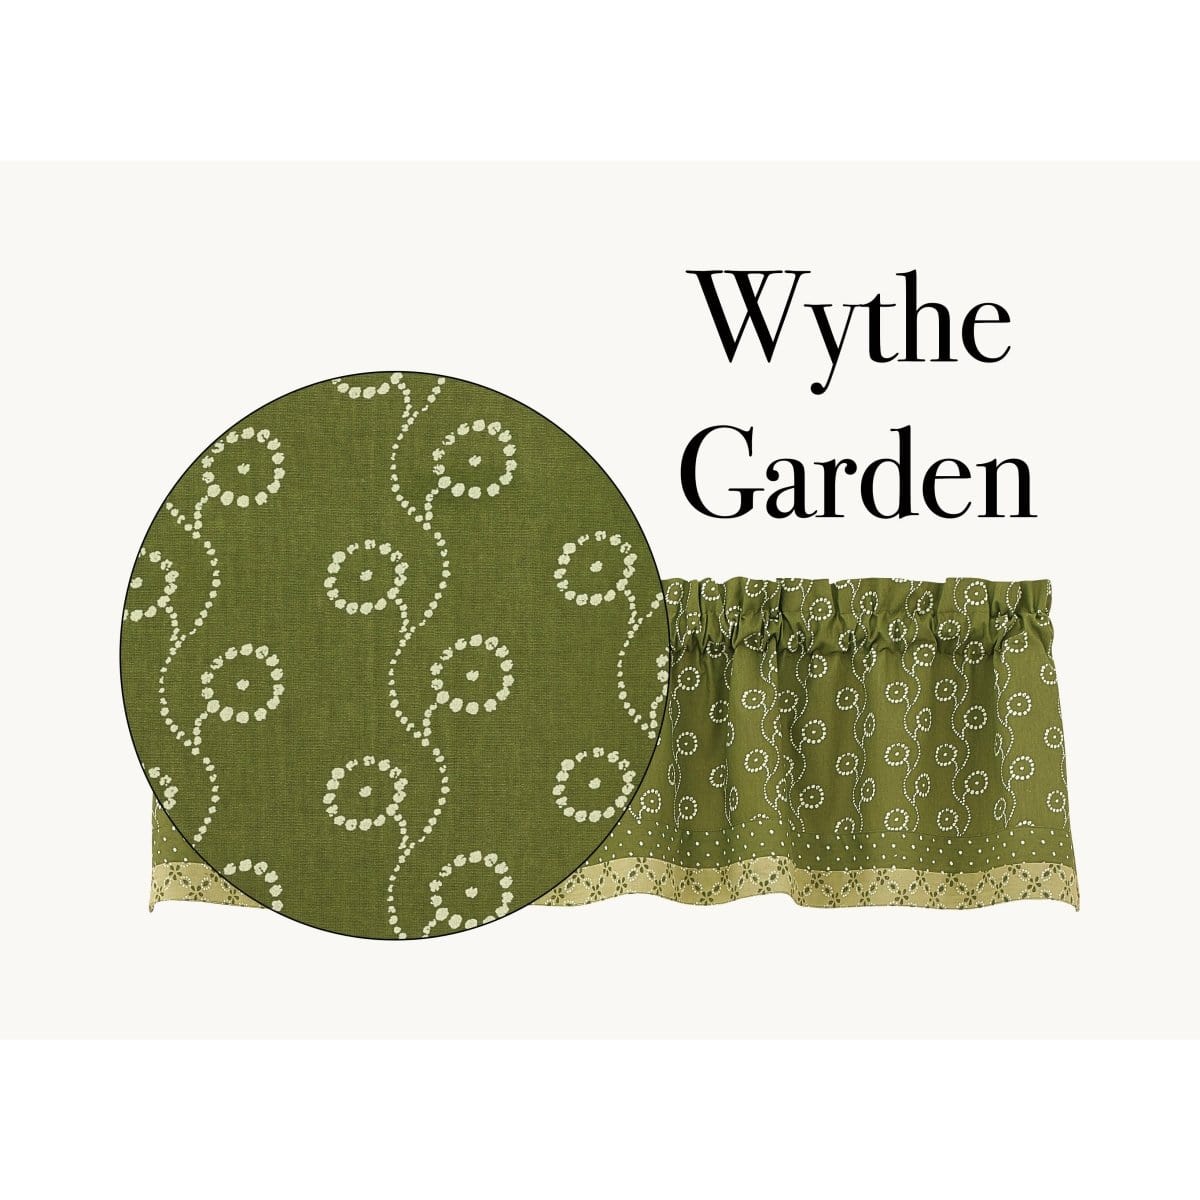 Wythe Garden Valance Lined-Park Designs-The Village Merchant